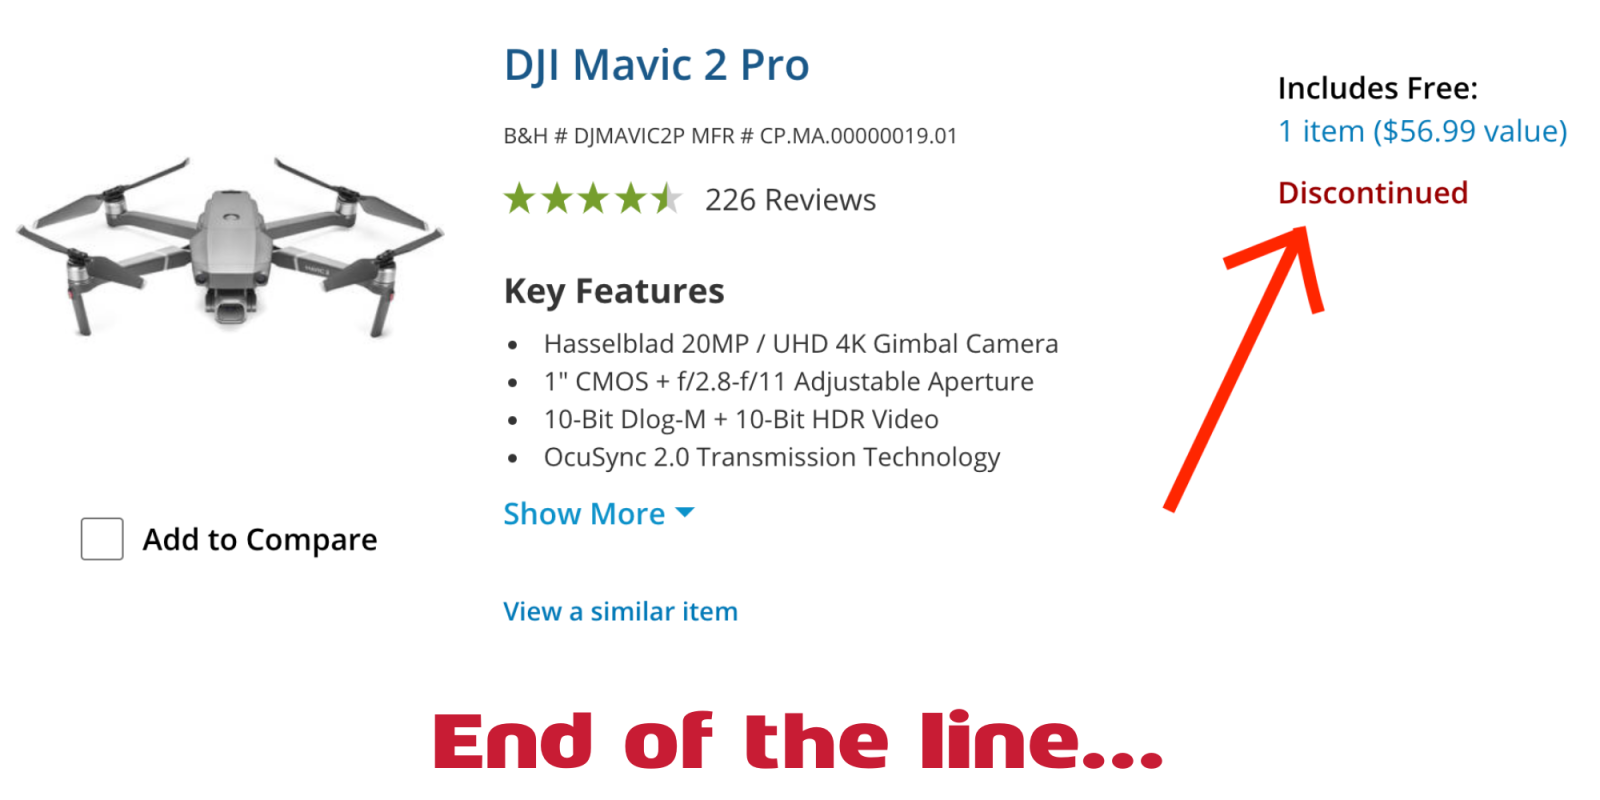 DJI Mavic Pro 2 discontinued